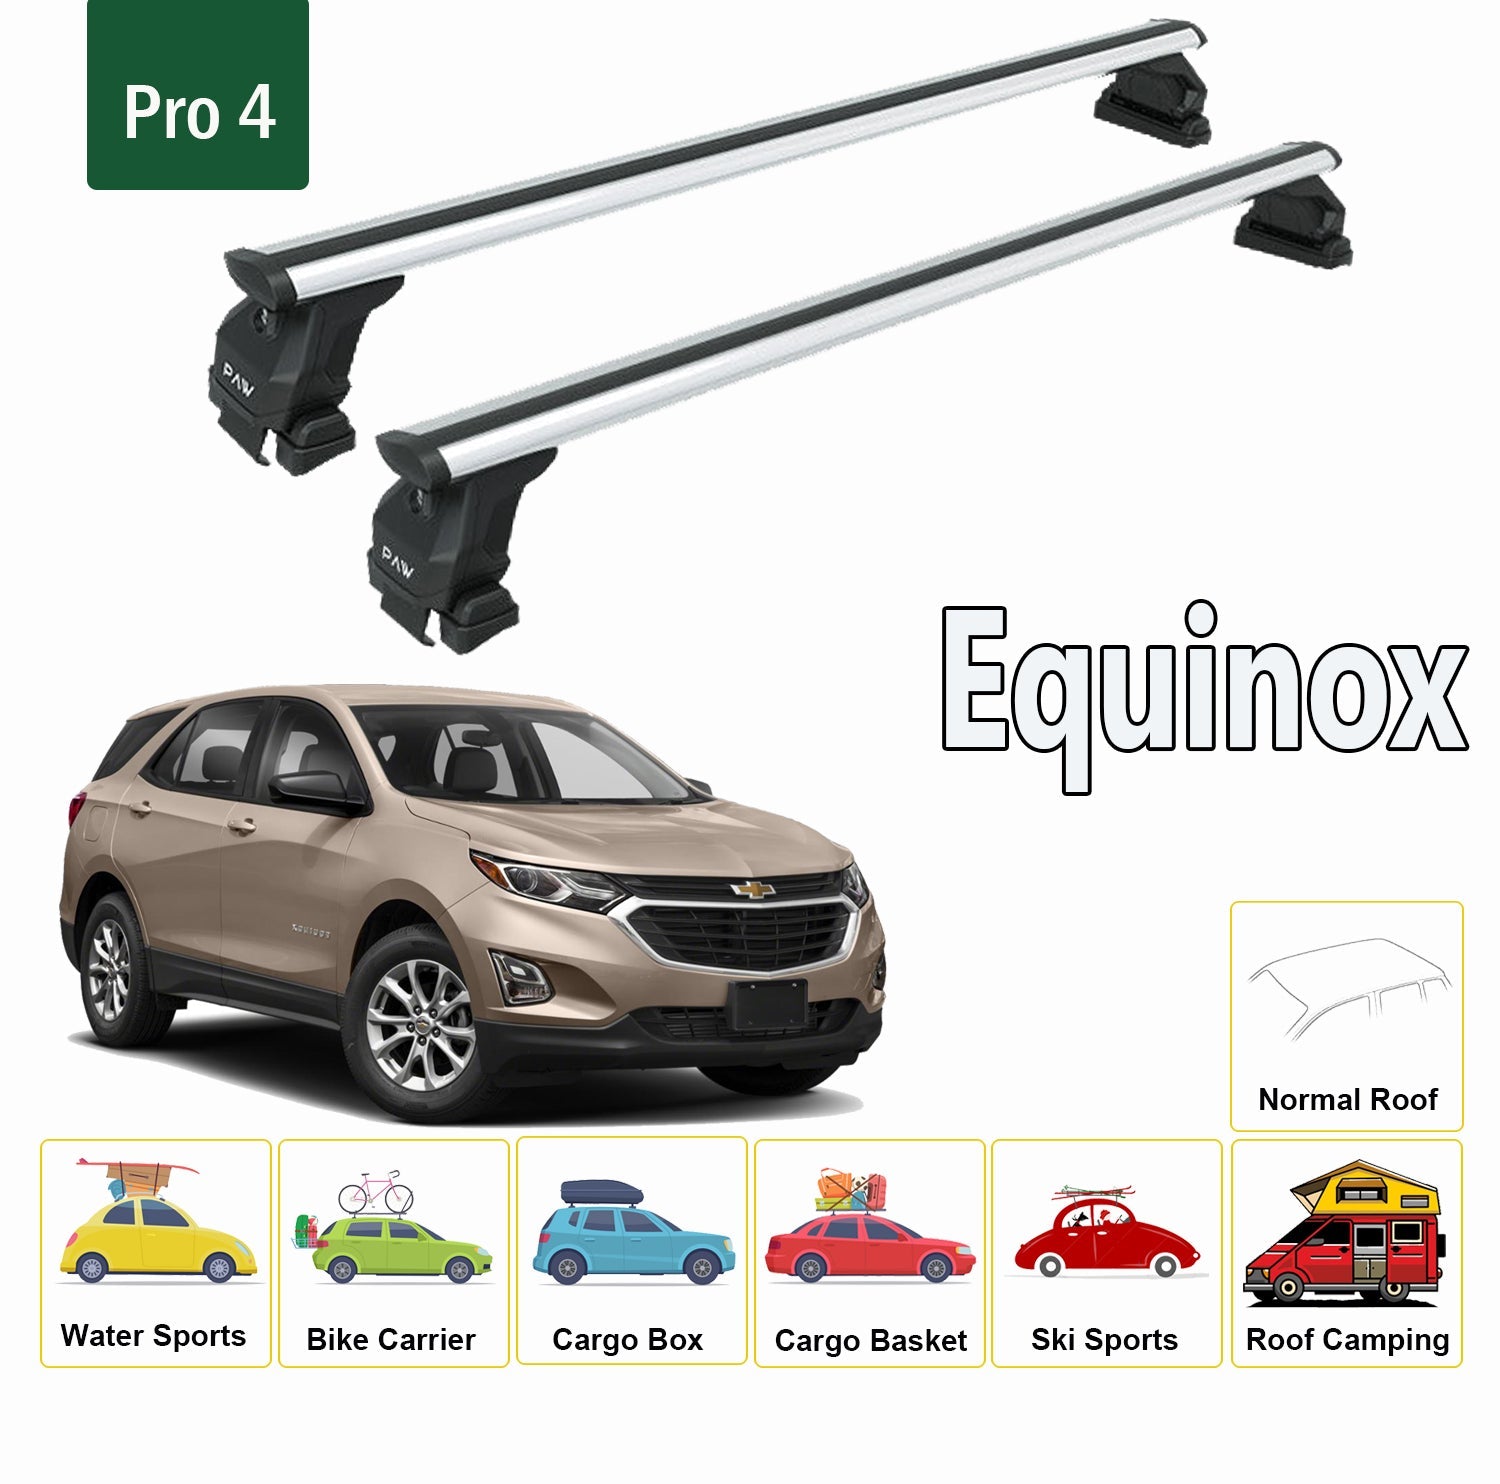 For Chevrolet Equinox 2018-Up Roof Rack System, Aluminium Cross Bar, Metal Bracket, Normal Roof, Black